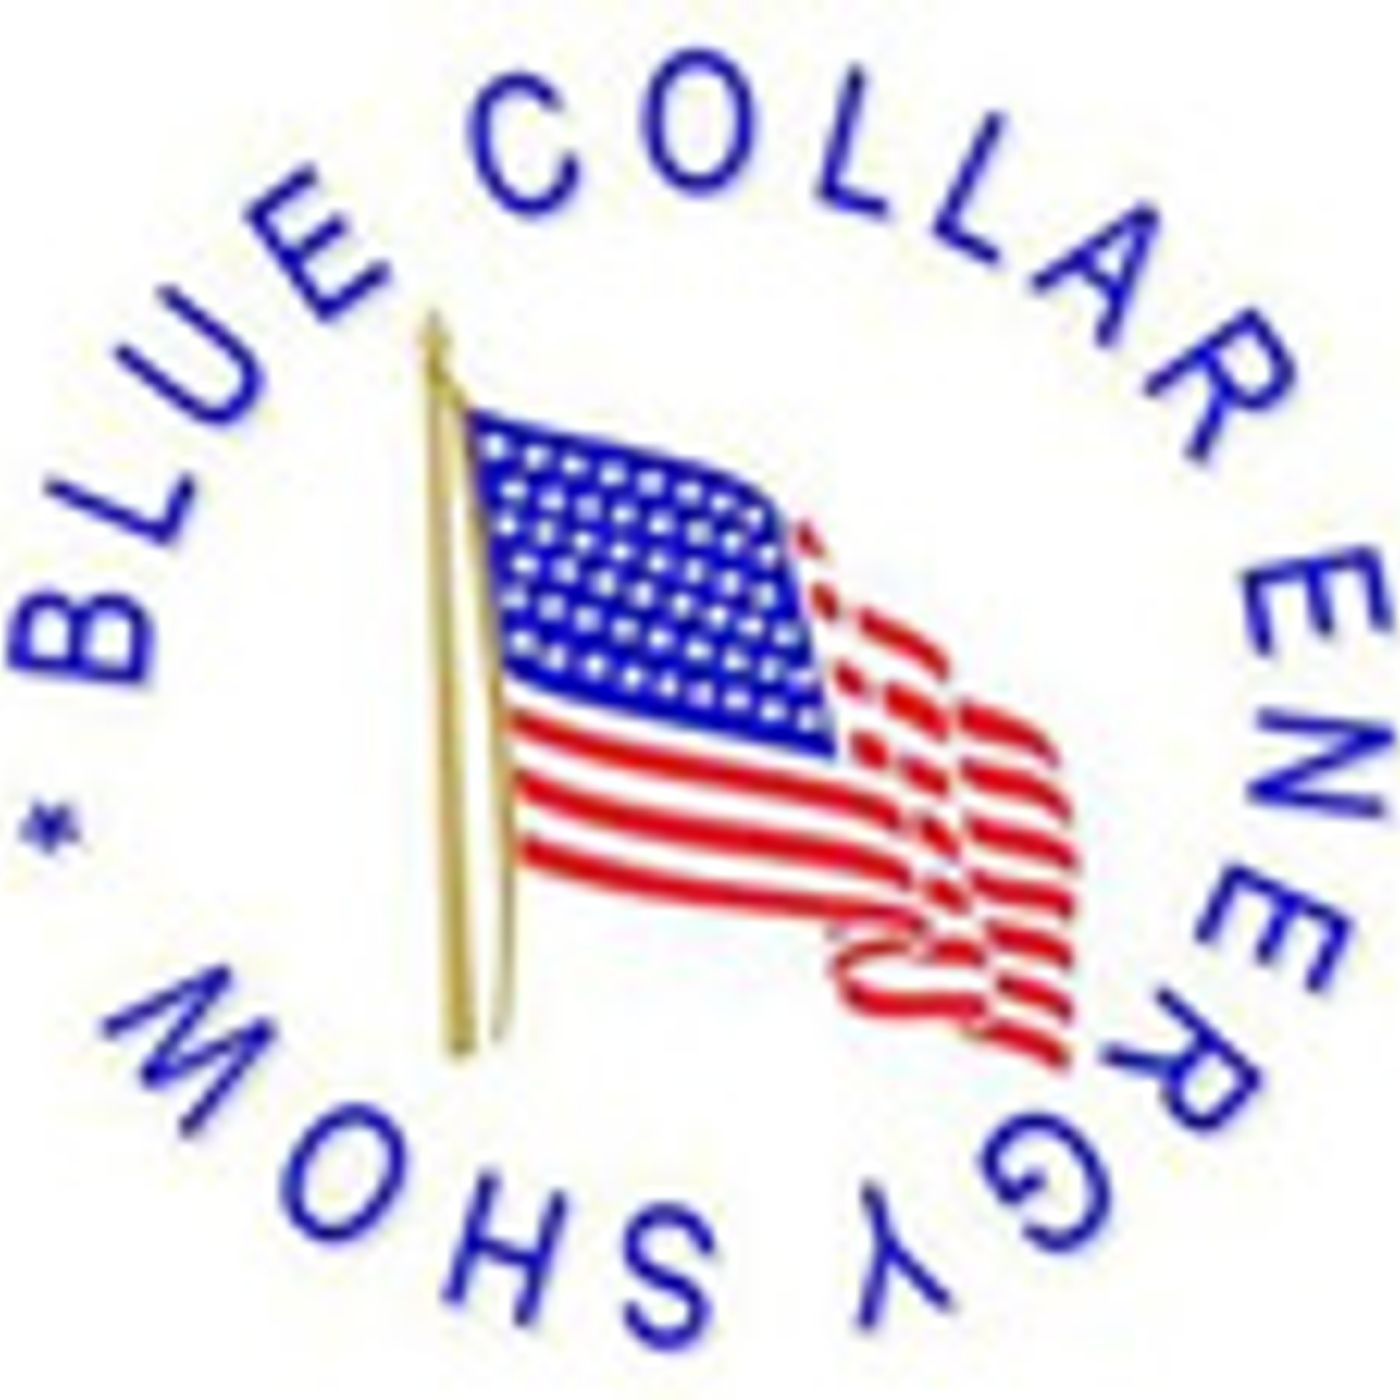 The Blue Collar Energy Show